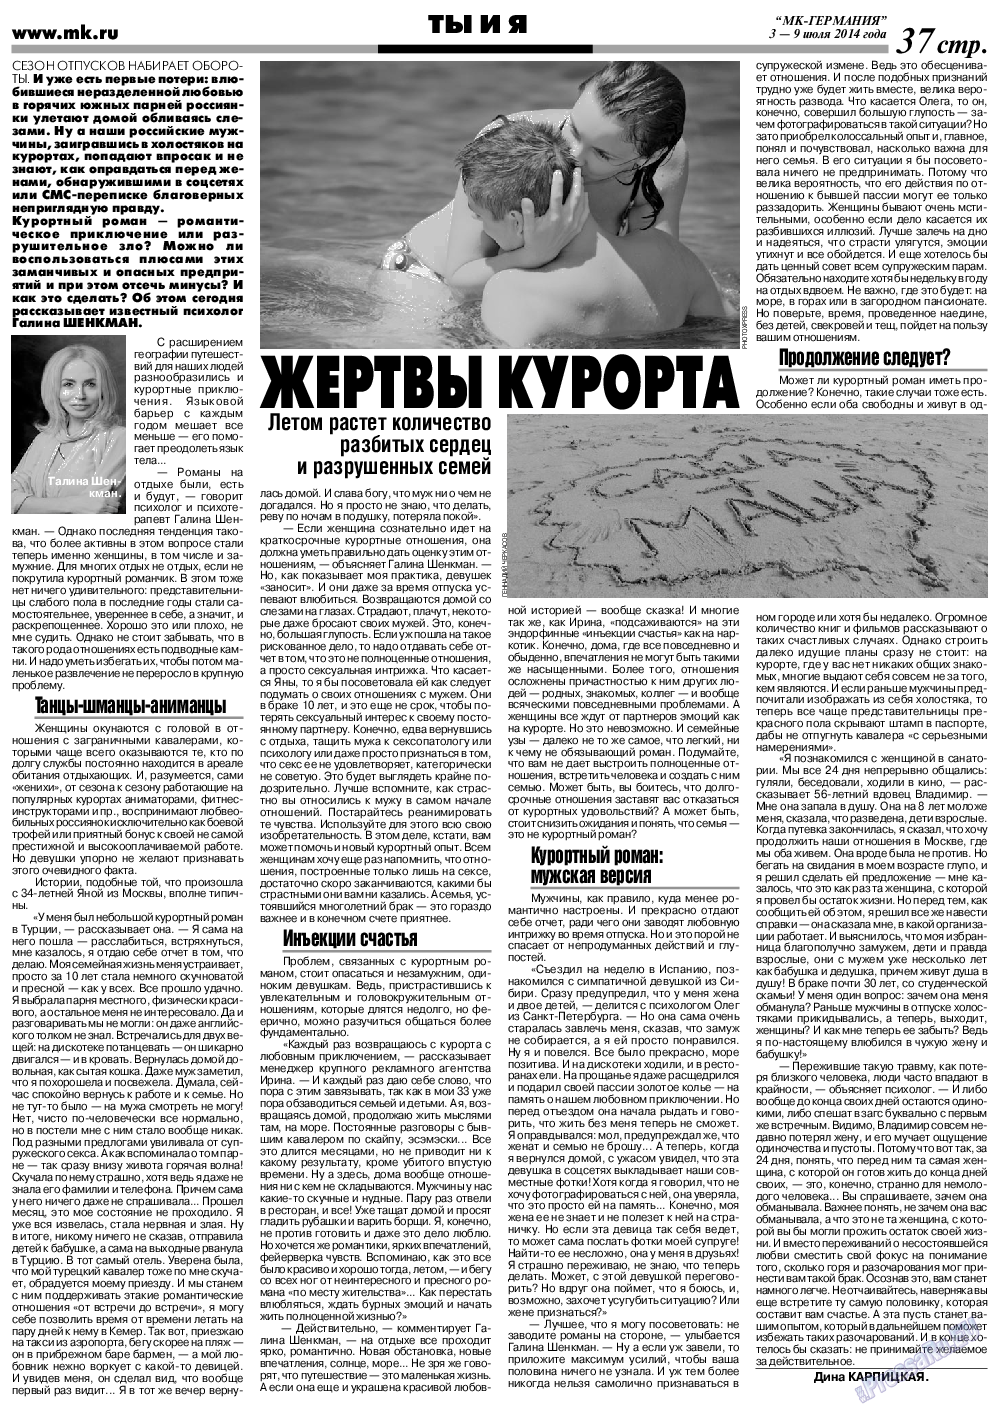 МК-Германия, газета. 2014 №27 стр.37